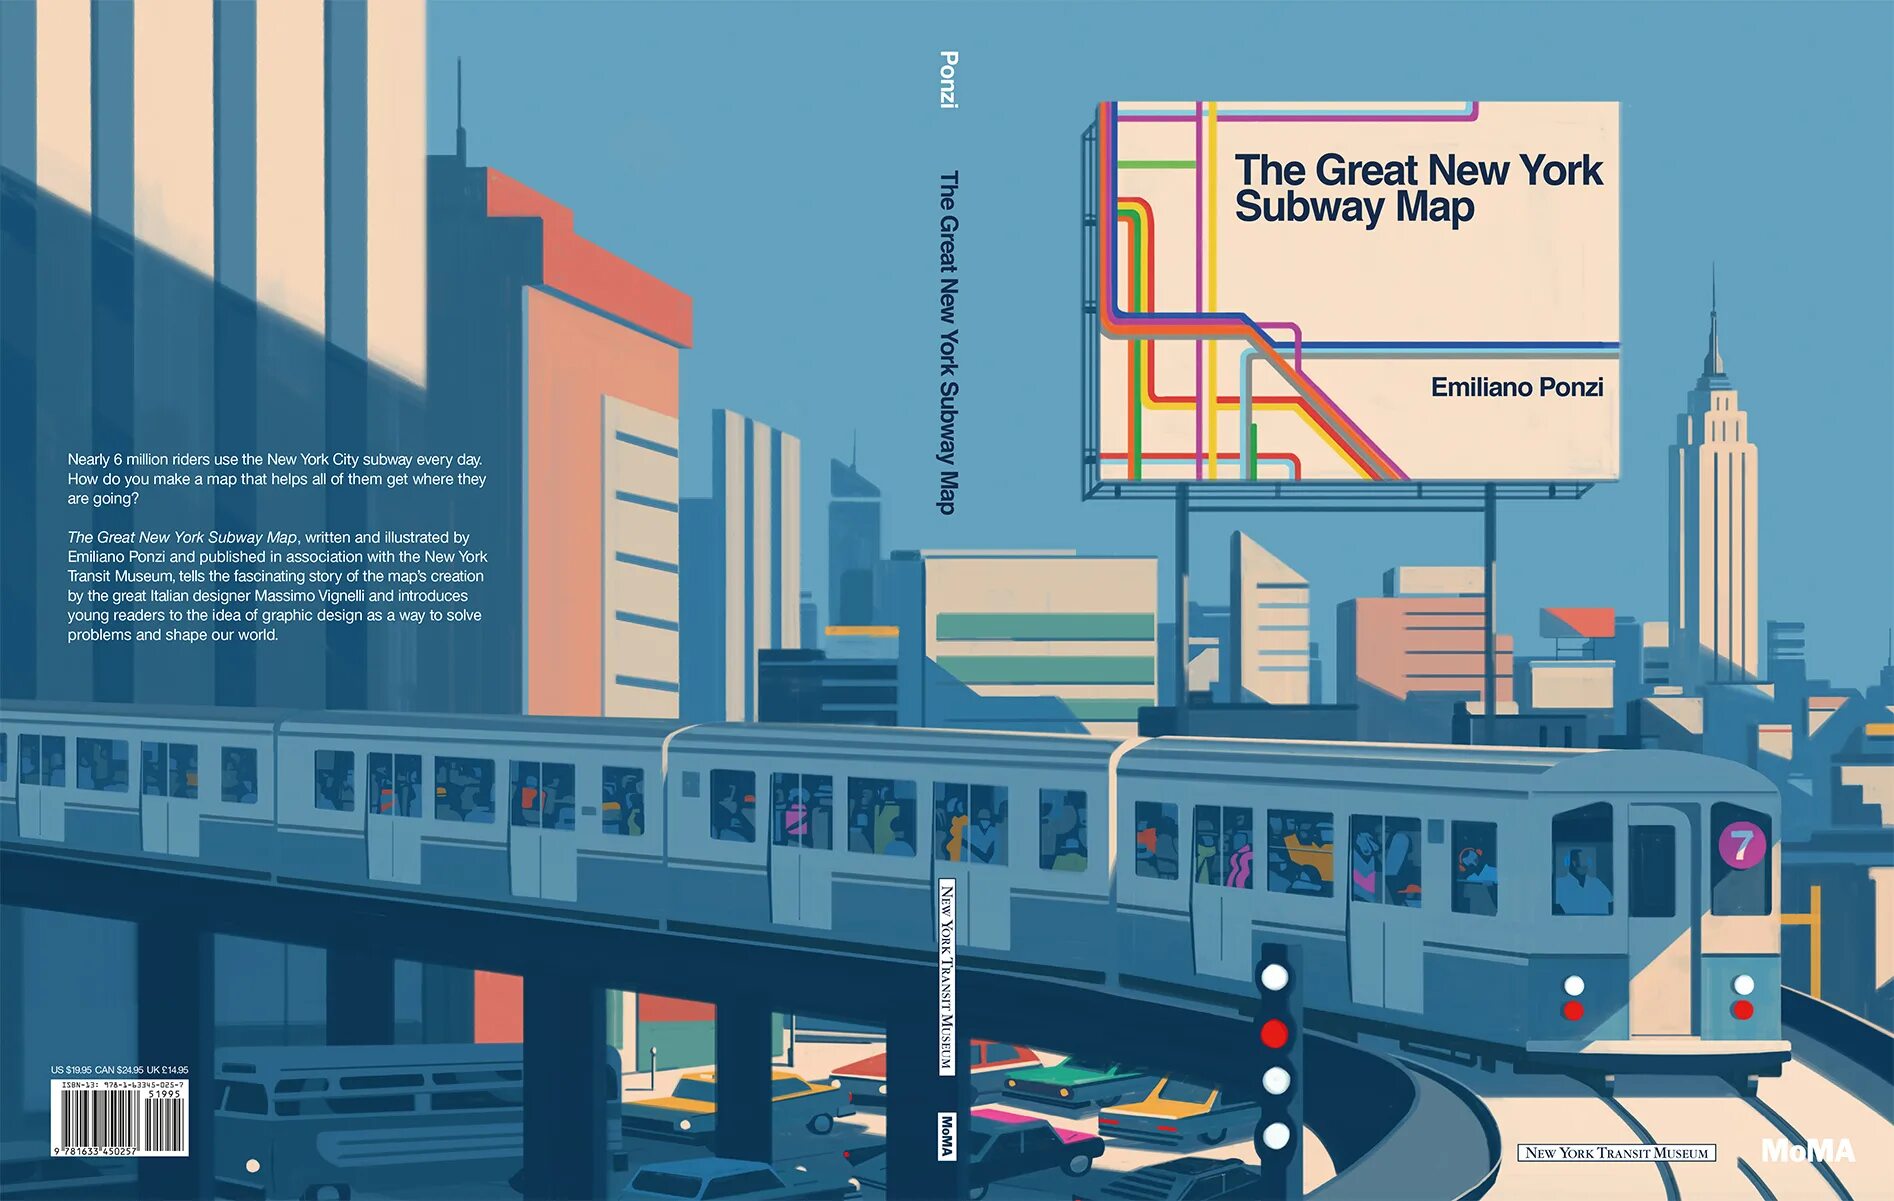 Нью-йоркский метрополитен. The great New York Subway Map. Метро Манхеттена. New York Subway Design massimo. Metro graphic